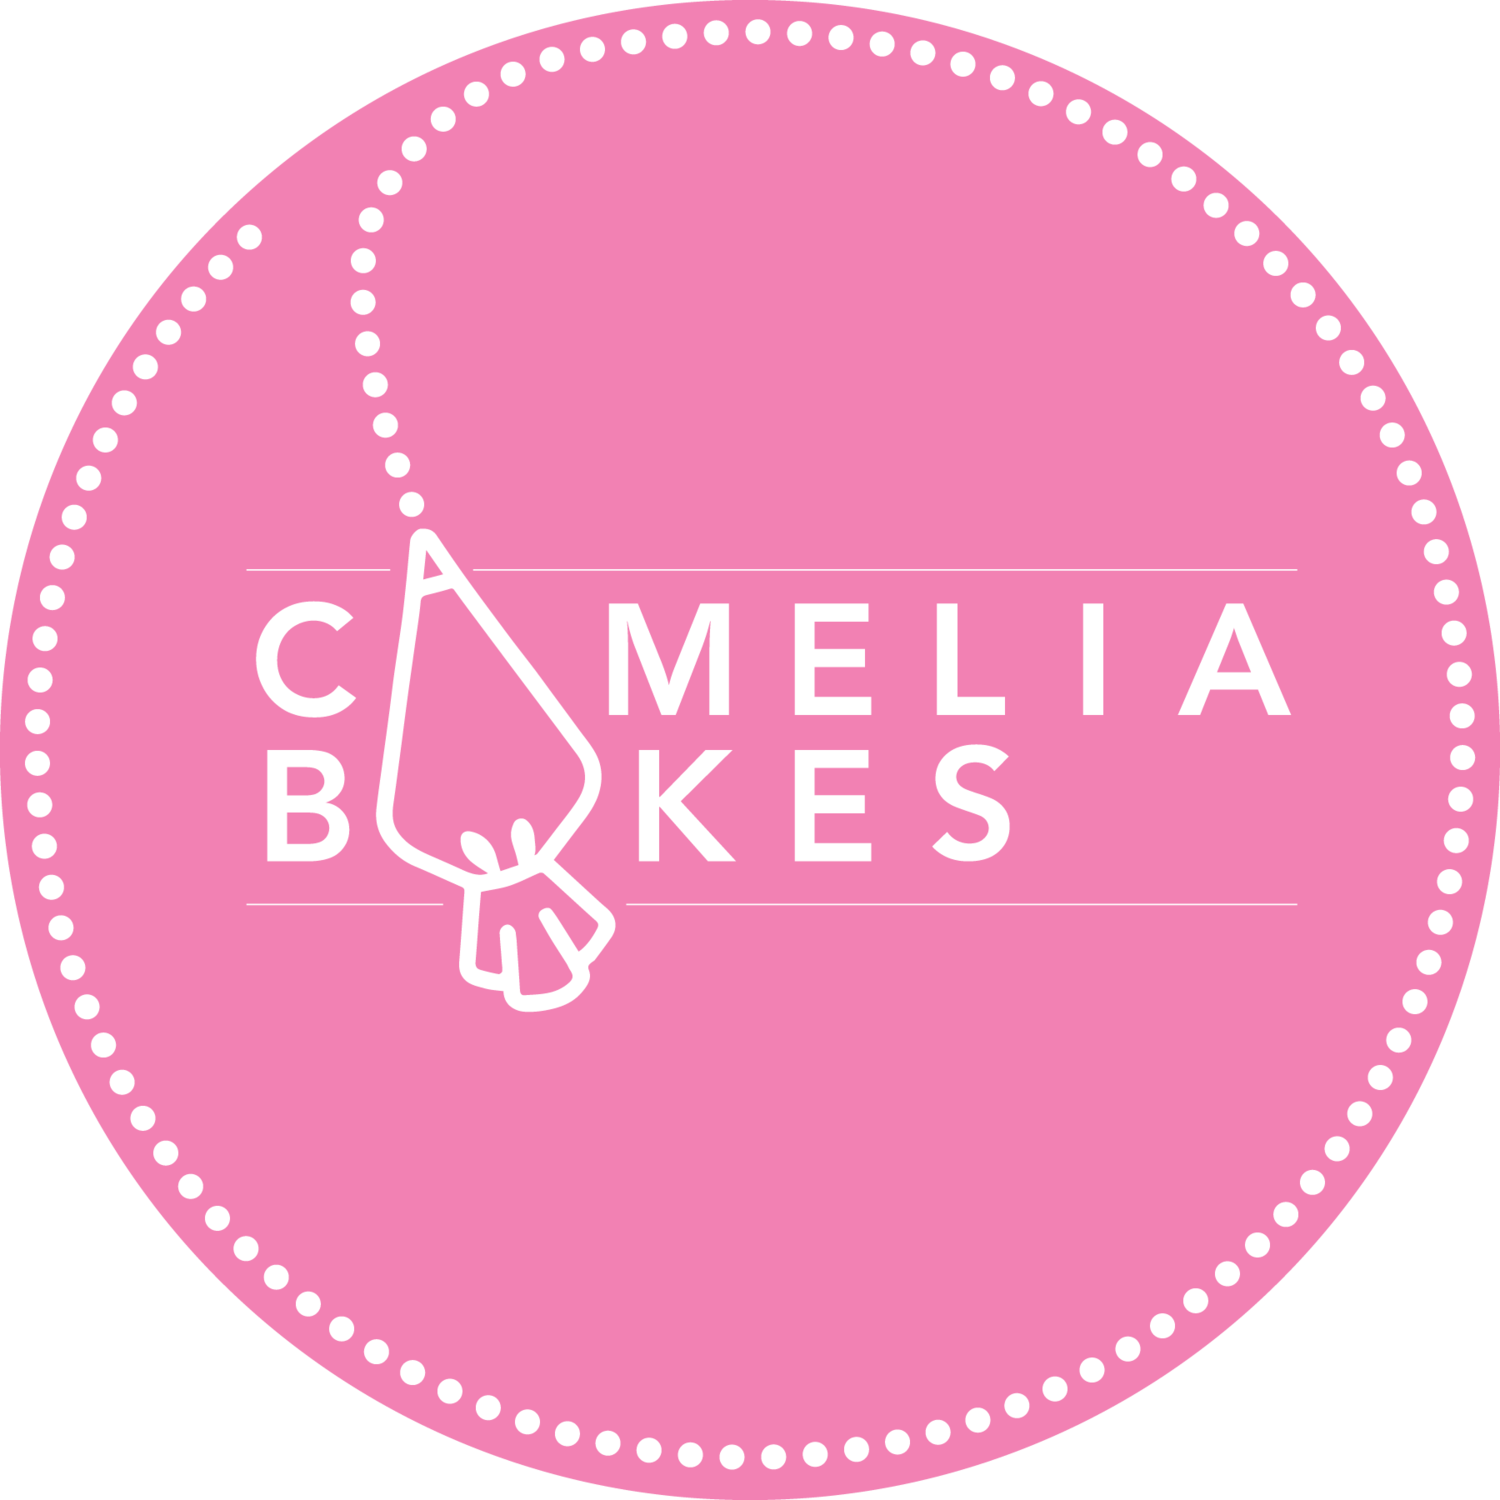 Camelia Bakes